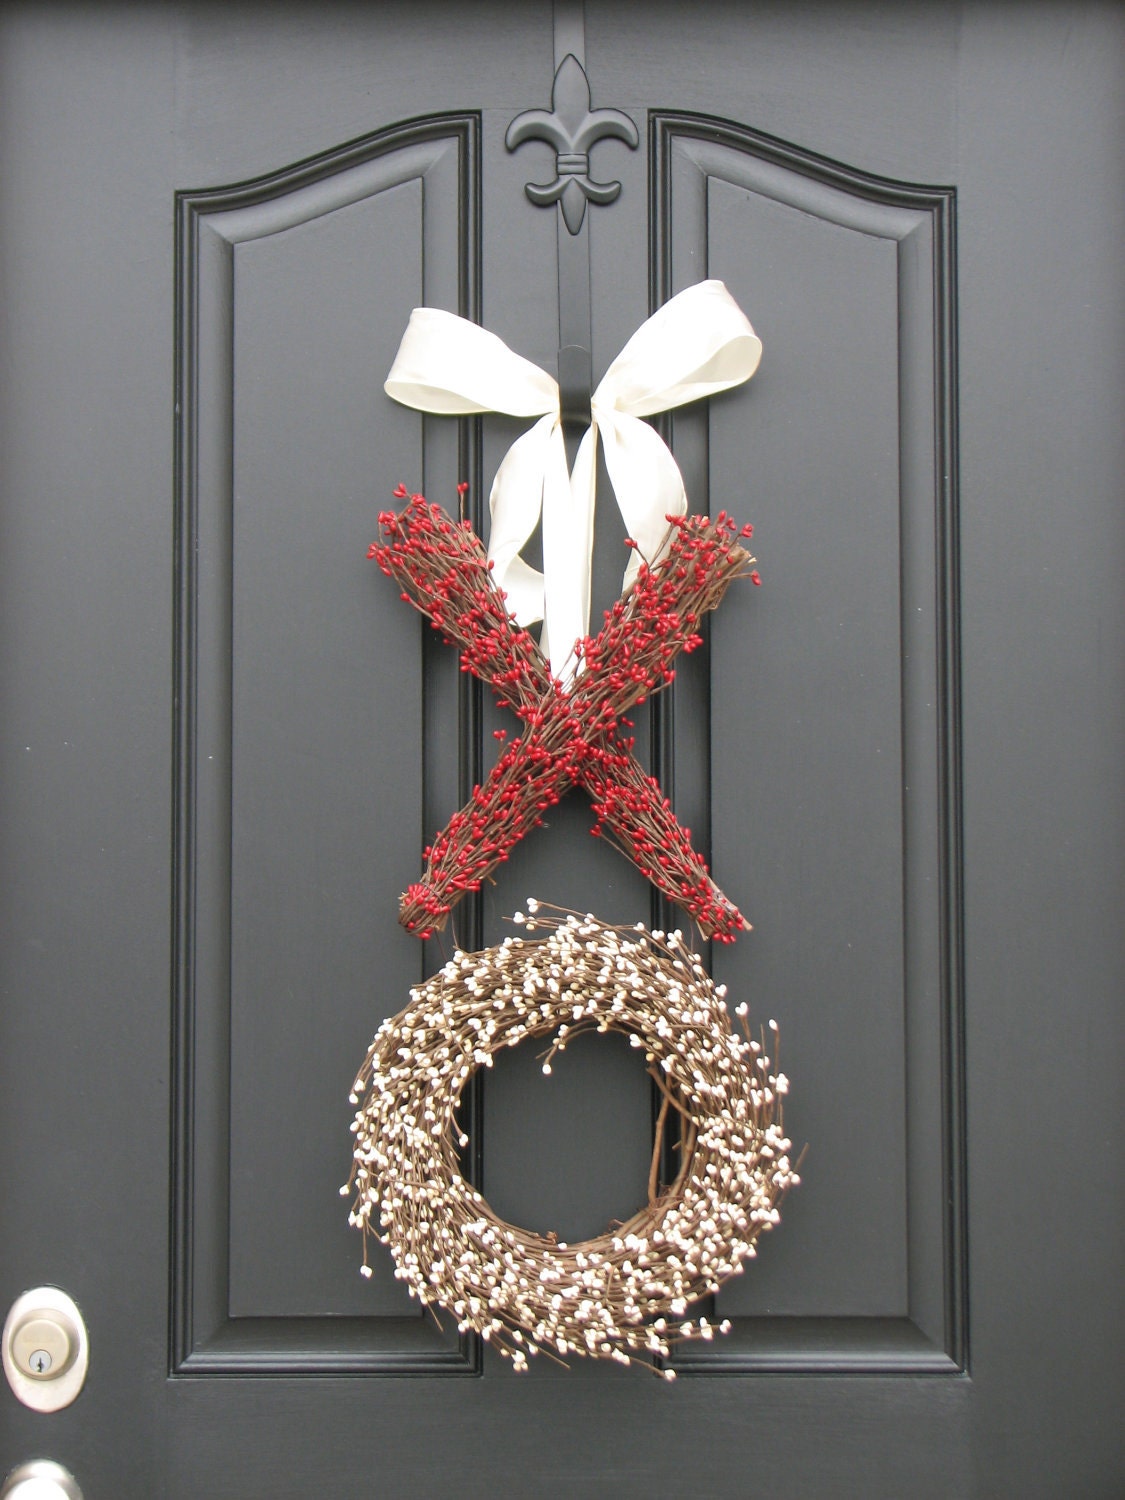 XOXO Decor - Berry Wreath - Kisses and Hugs - XO - Holiday Wreath - Valentine's Day Decor